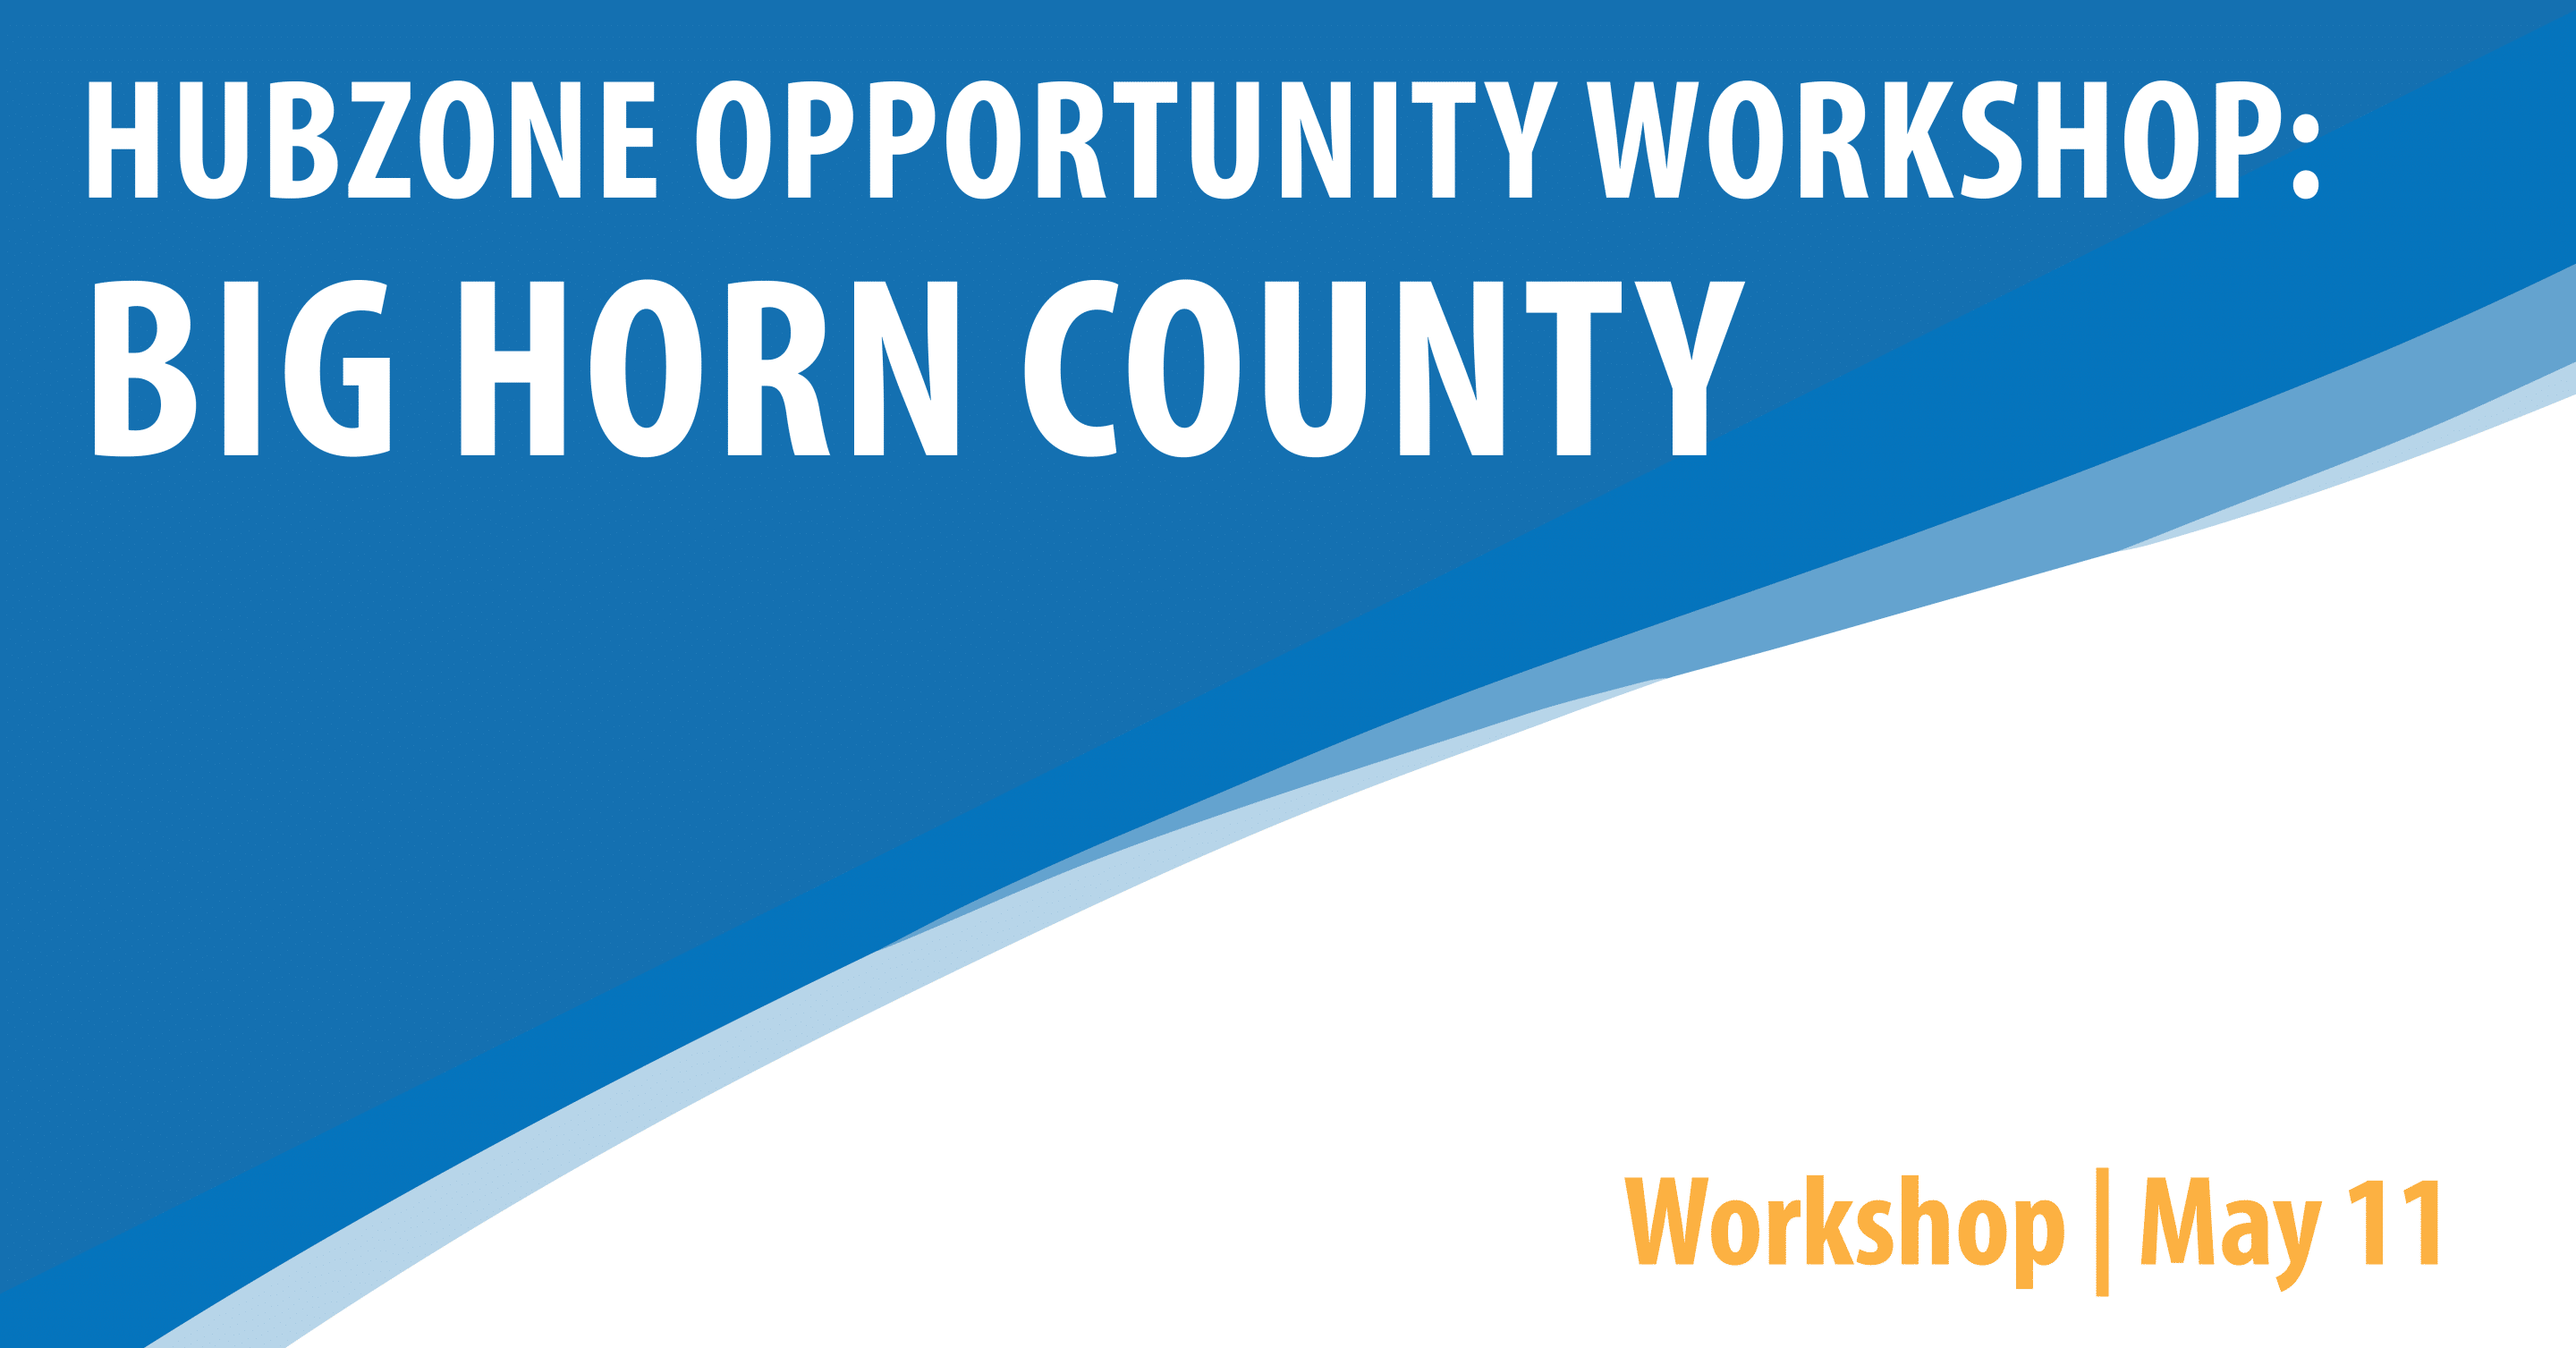 HUBZone Opportunity Workshop: Big Horn County